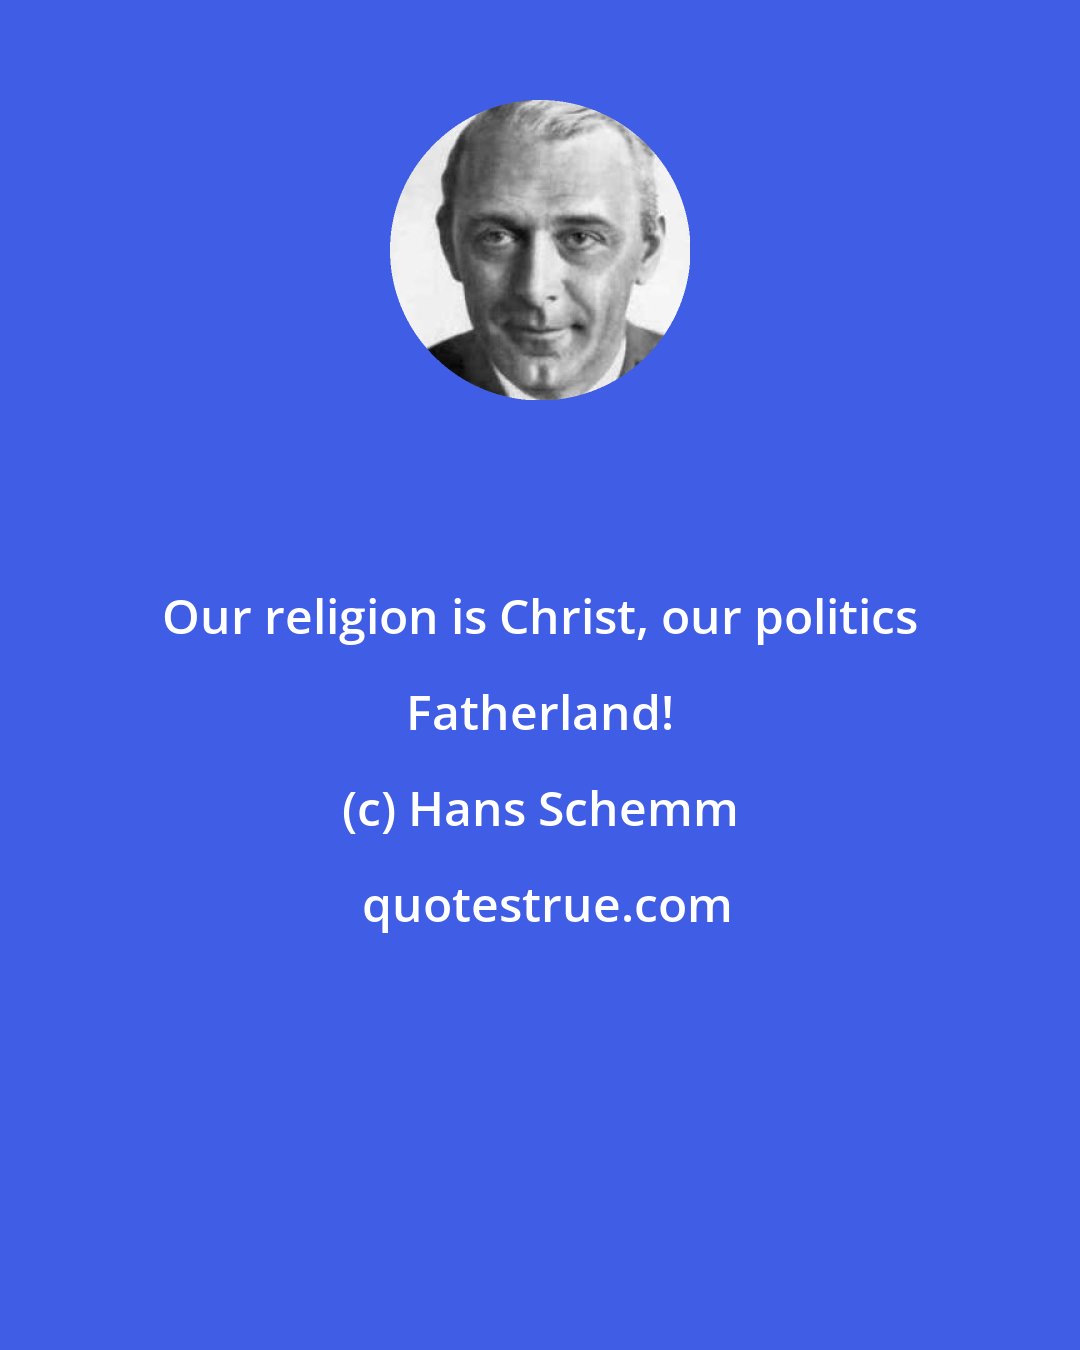 Hans Schemm: Our religion is Christ, our politics Fatherland!